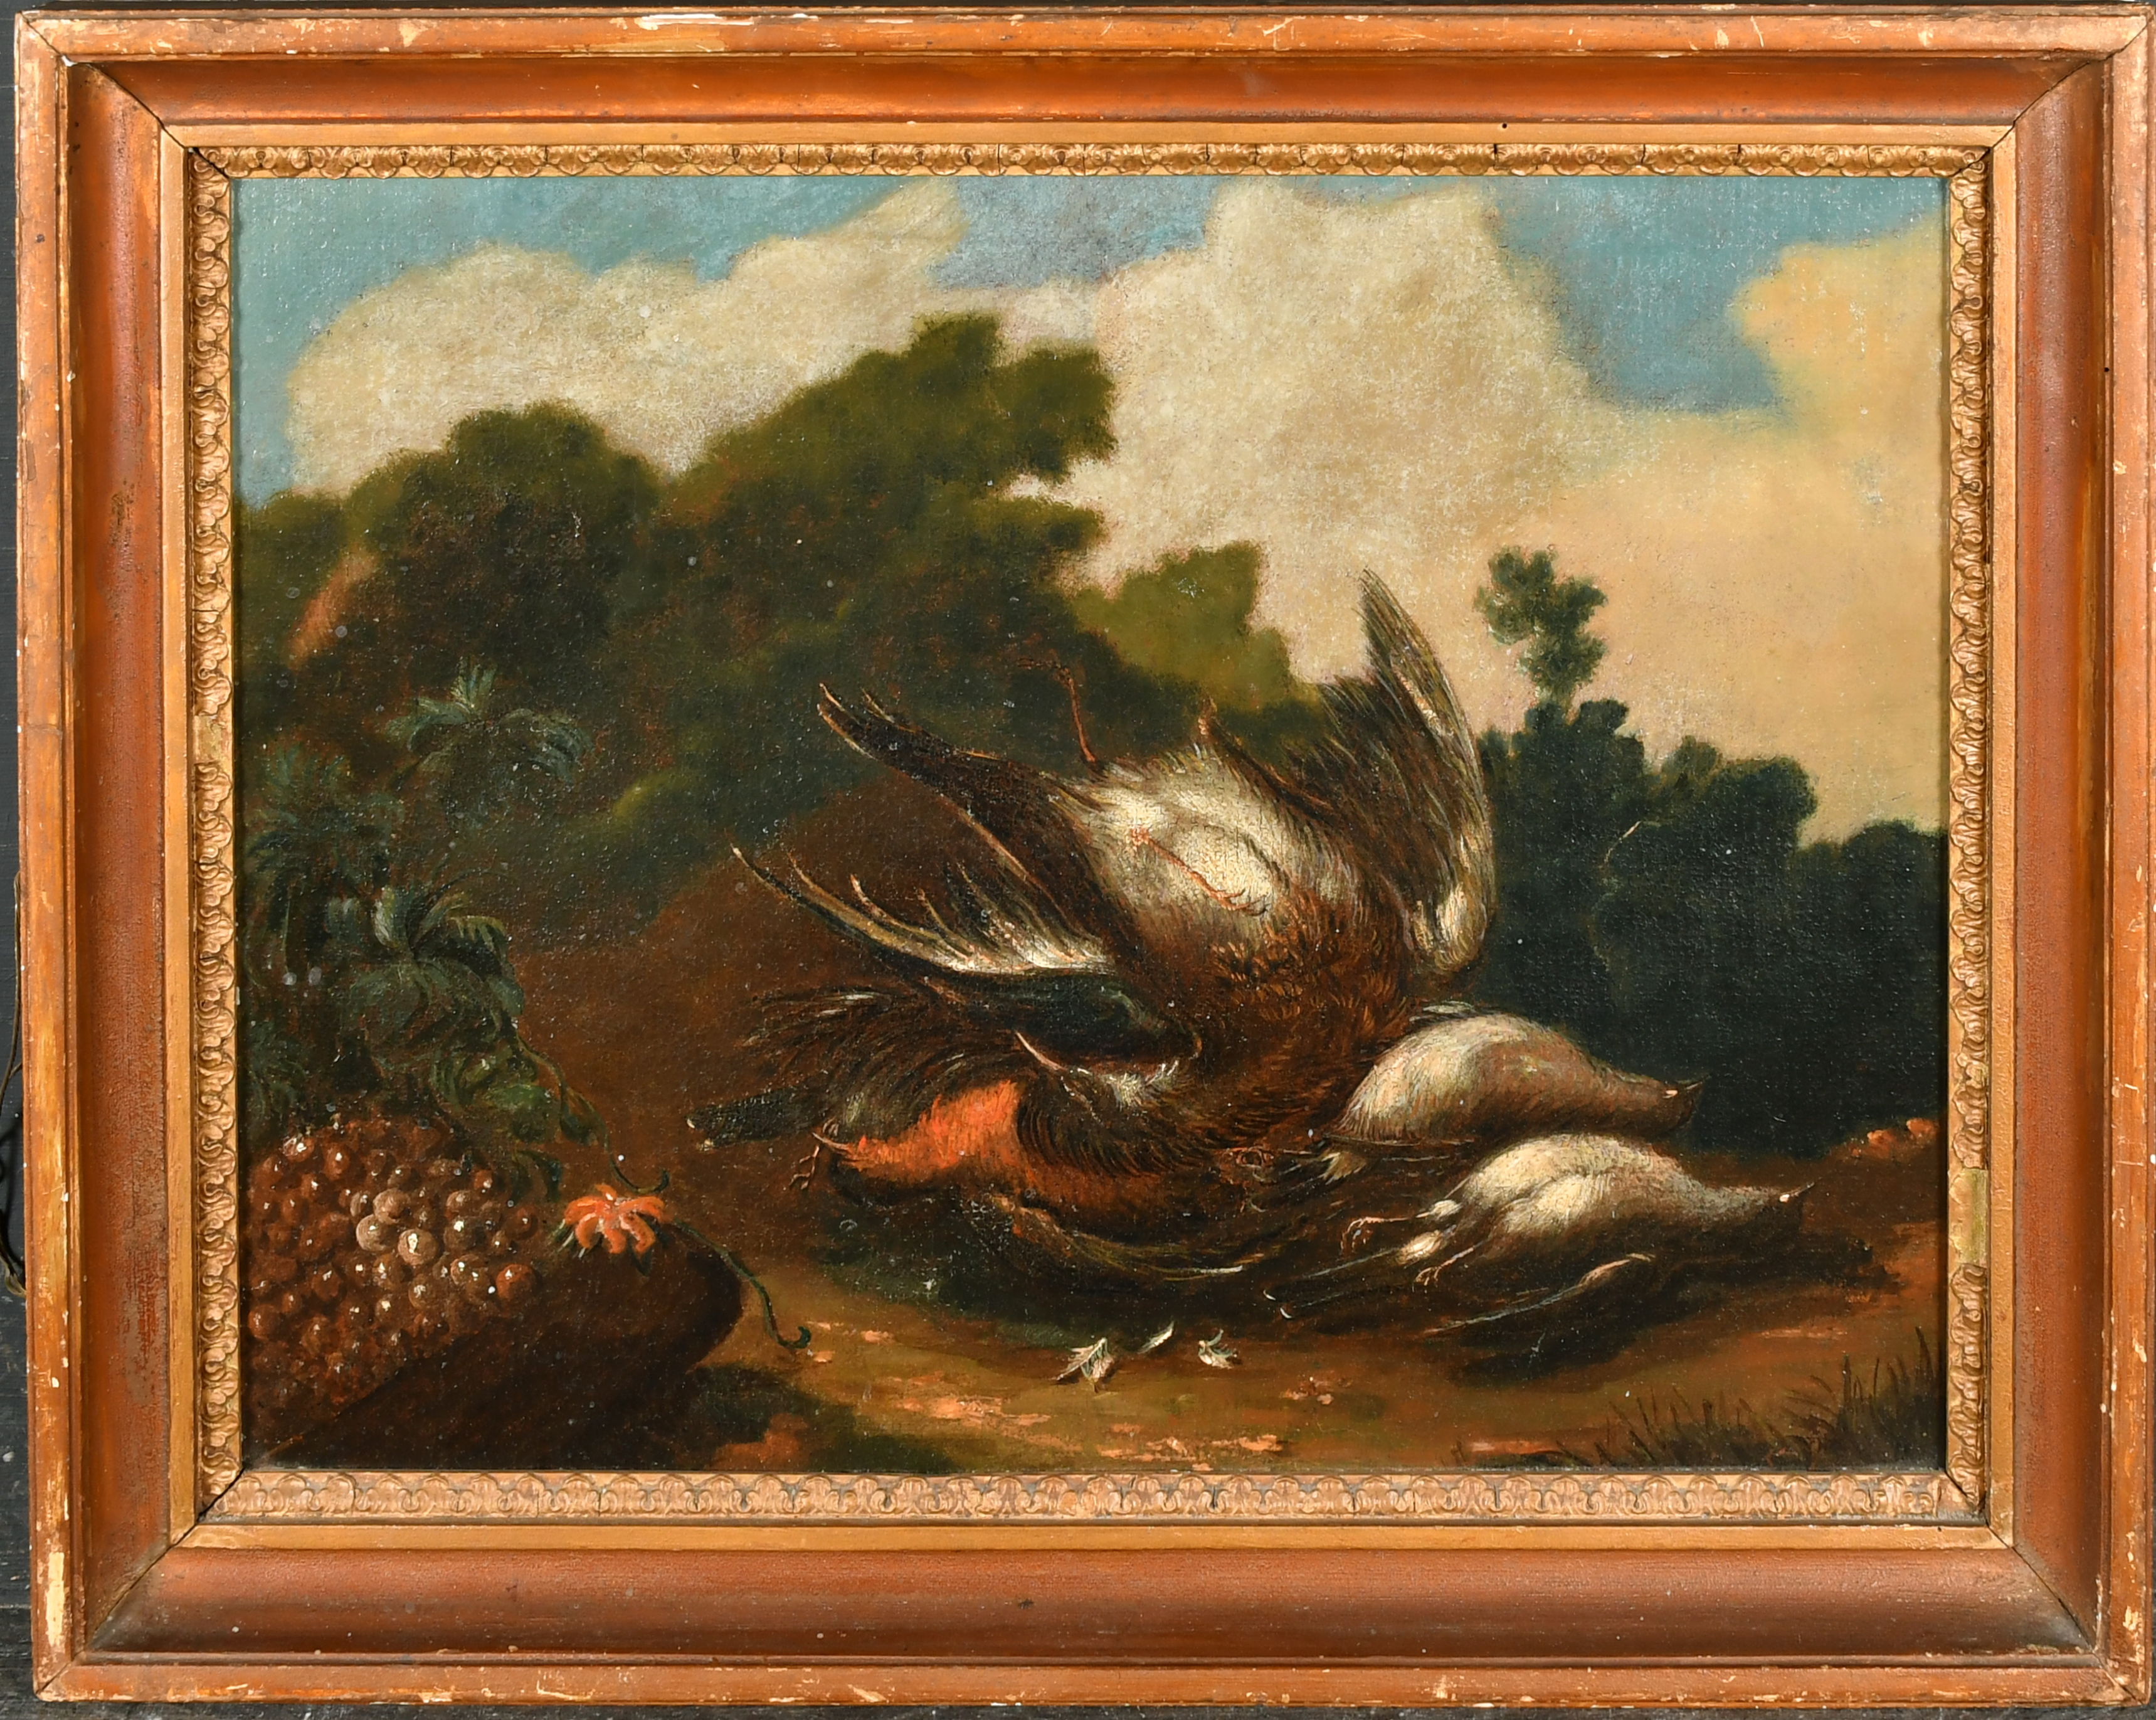 18th Century Italian School, Still Life with Dead Birds, Oil on canvas, 13.5" x 17" (34.3 x 43.2cm) - Image 2 of 3